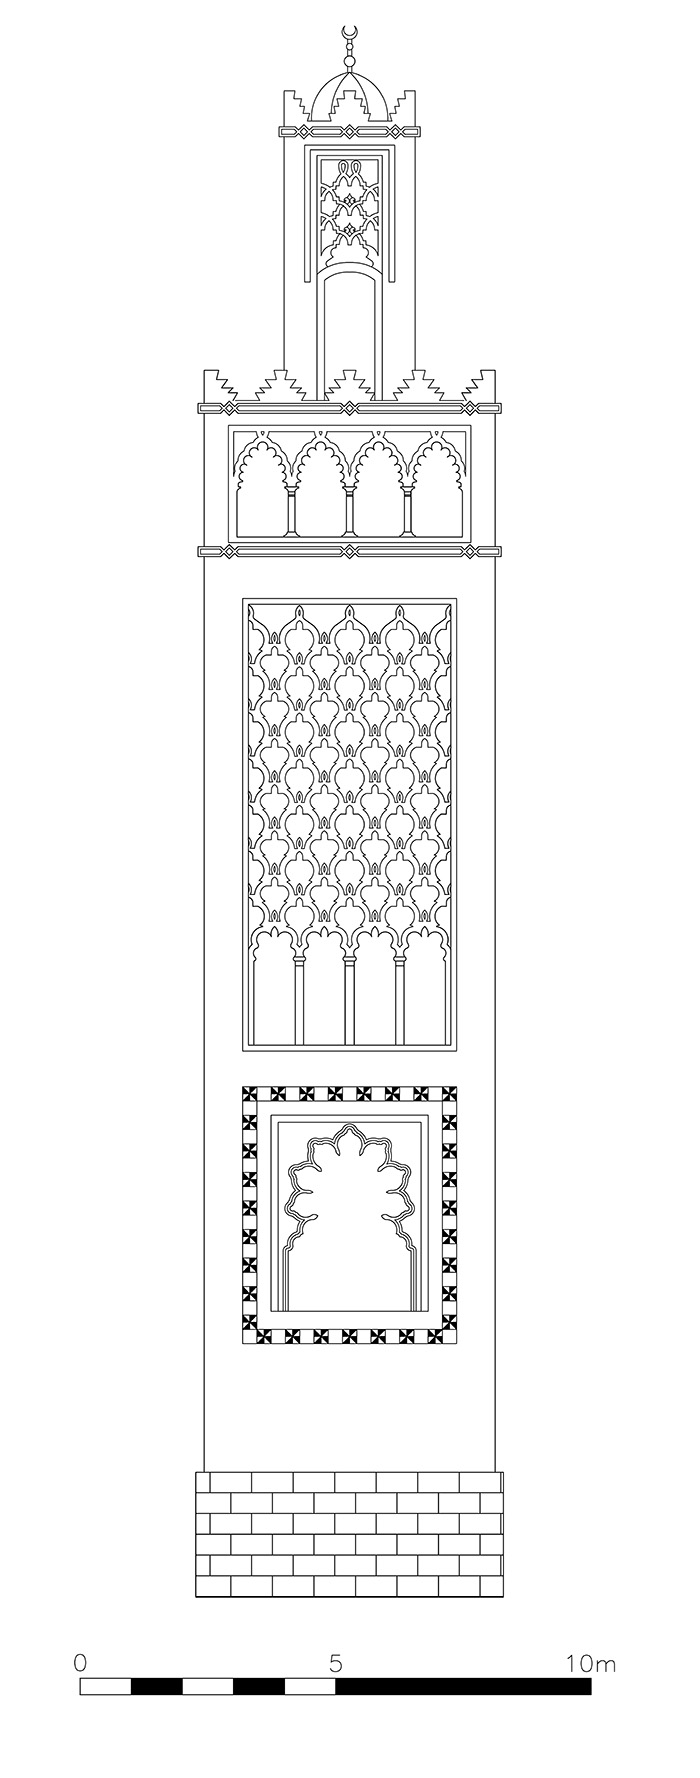 North elevation of the minaret, Based on Ravoisié (1851)